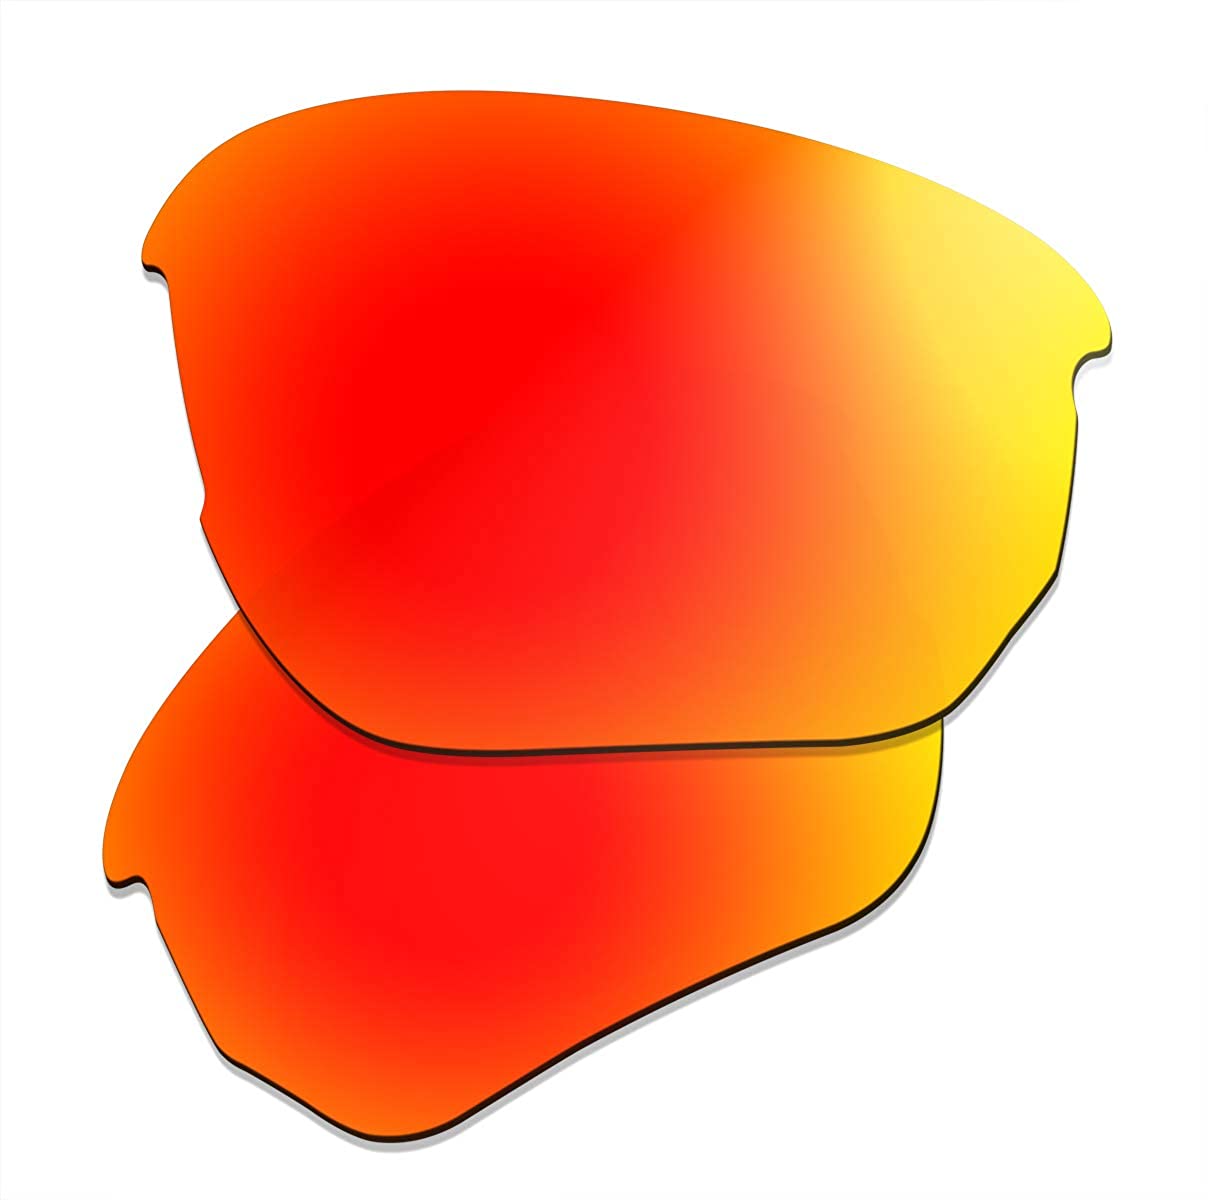 Prizo Polarized Replacement Lenses for Oakley Flak Beta OO9363 Sunglasses